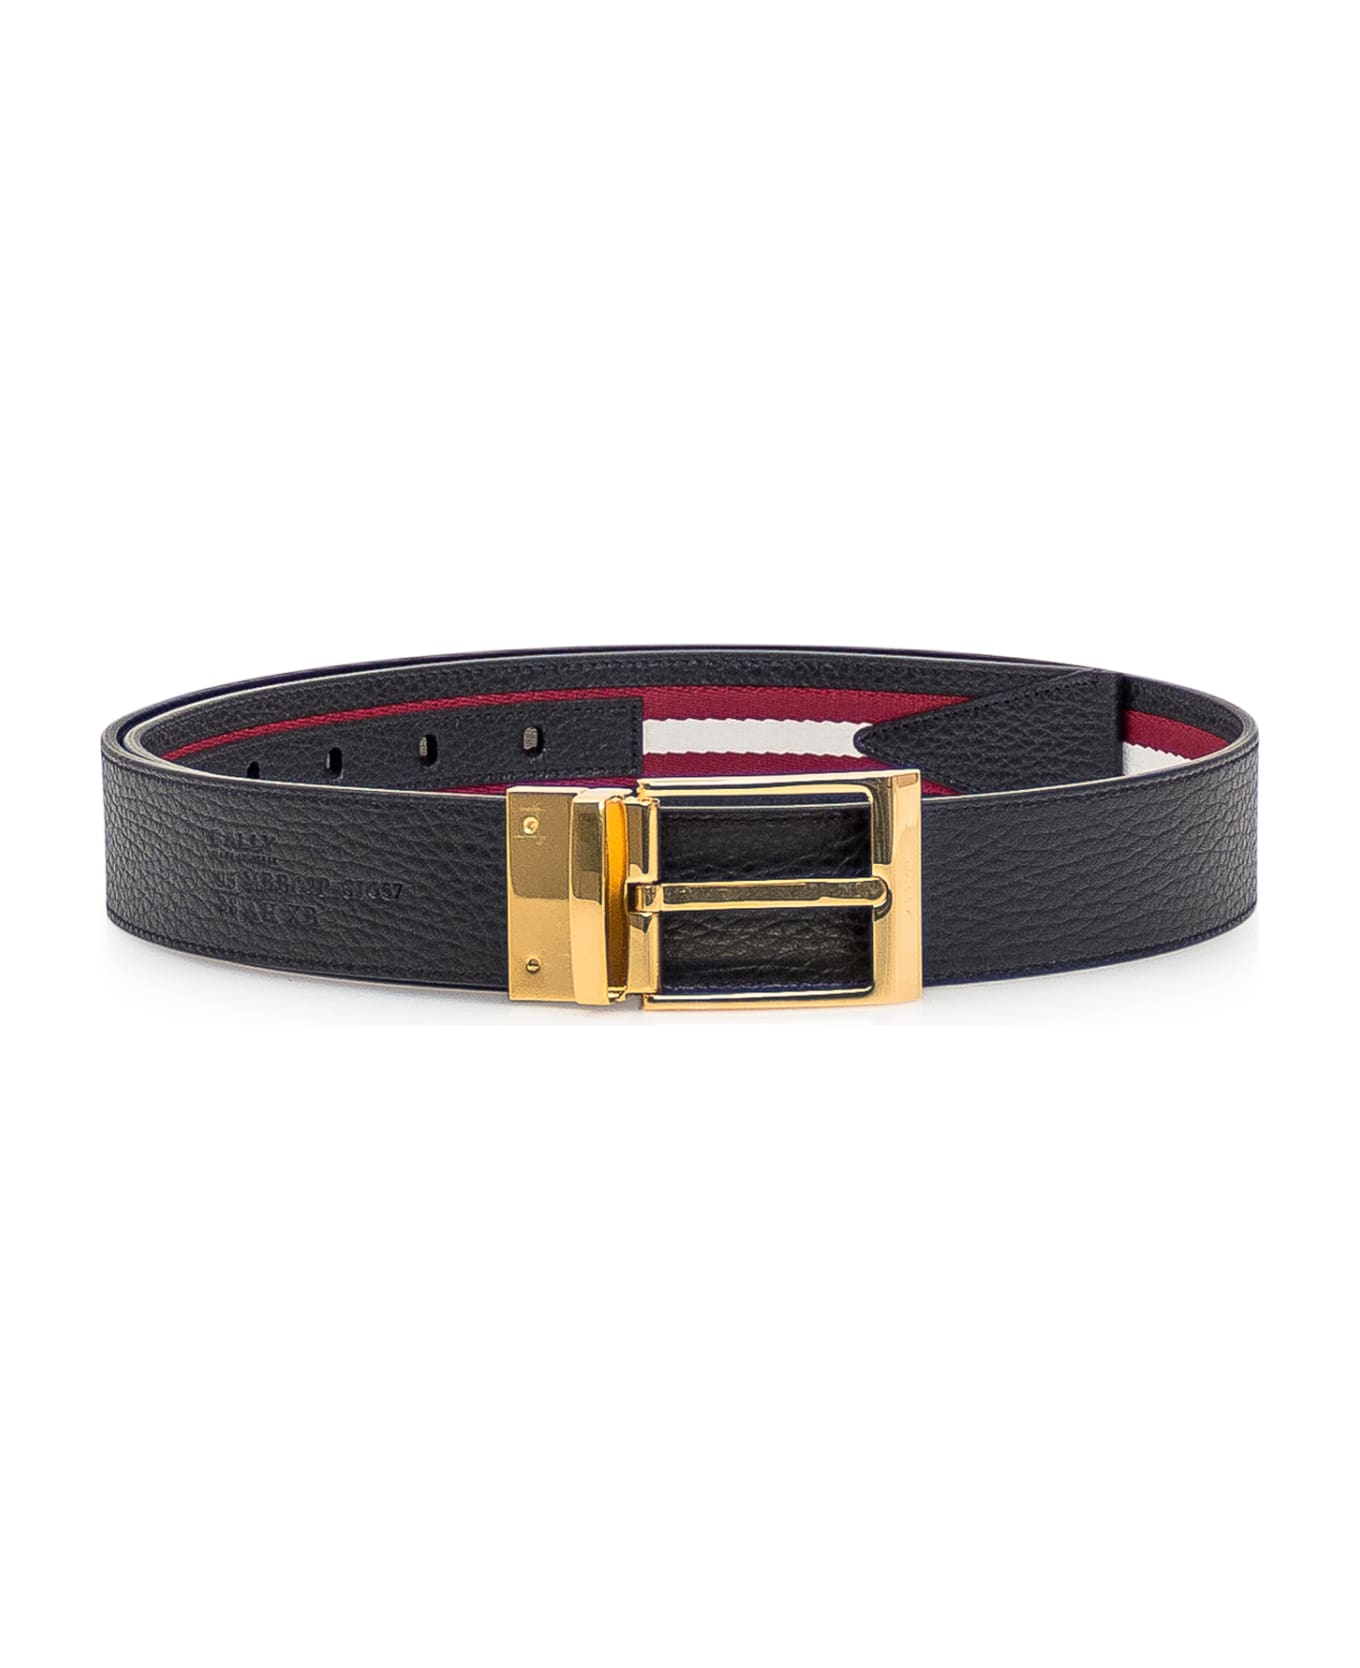 Bally Leather Belt - BLACK+RED/BONE+PALL